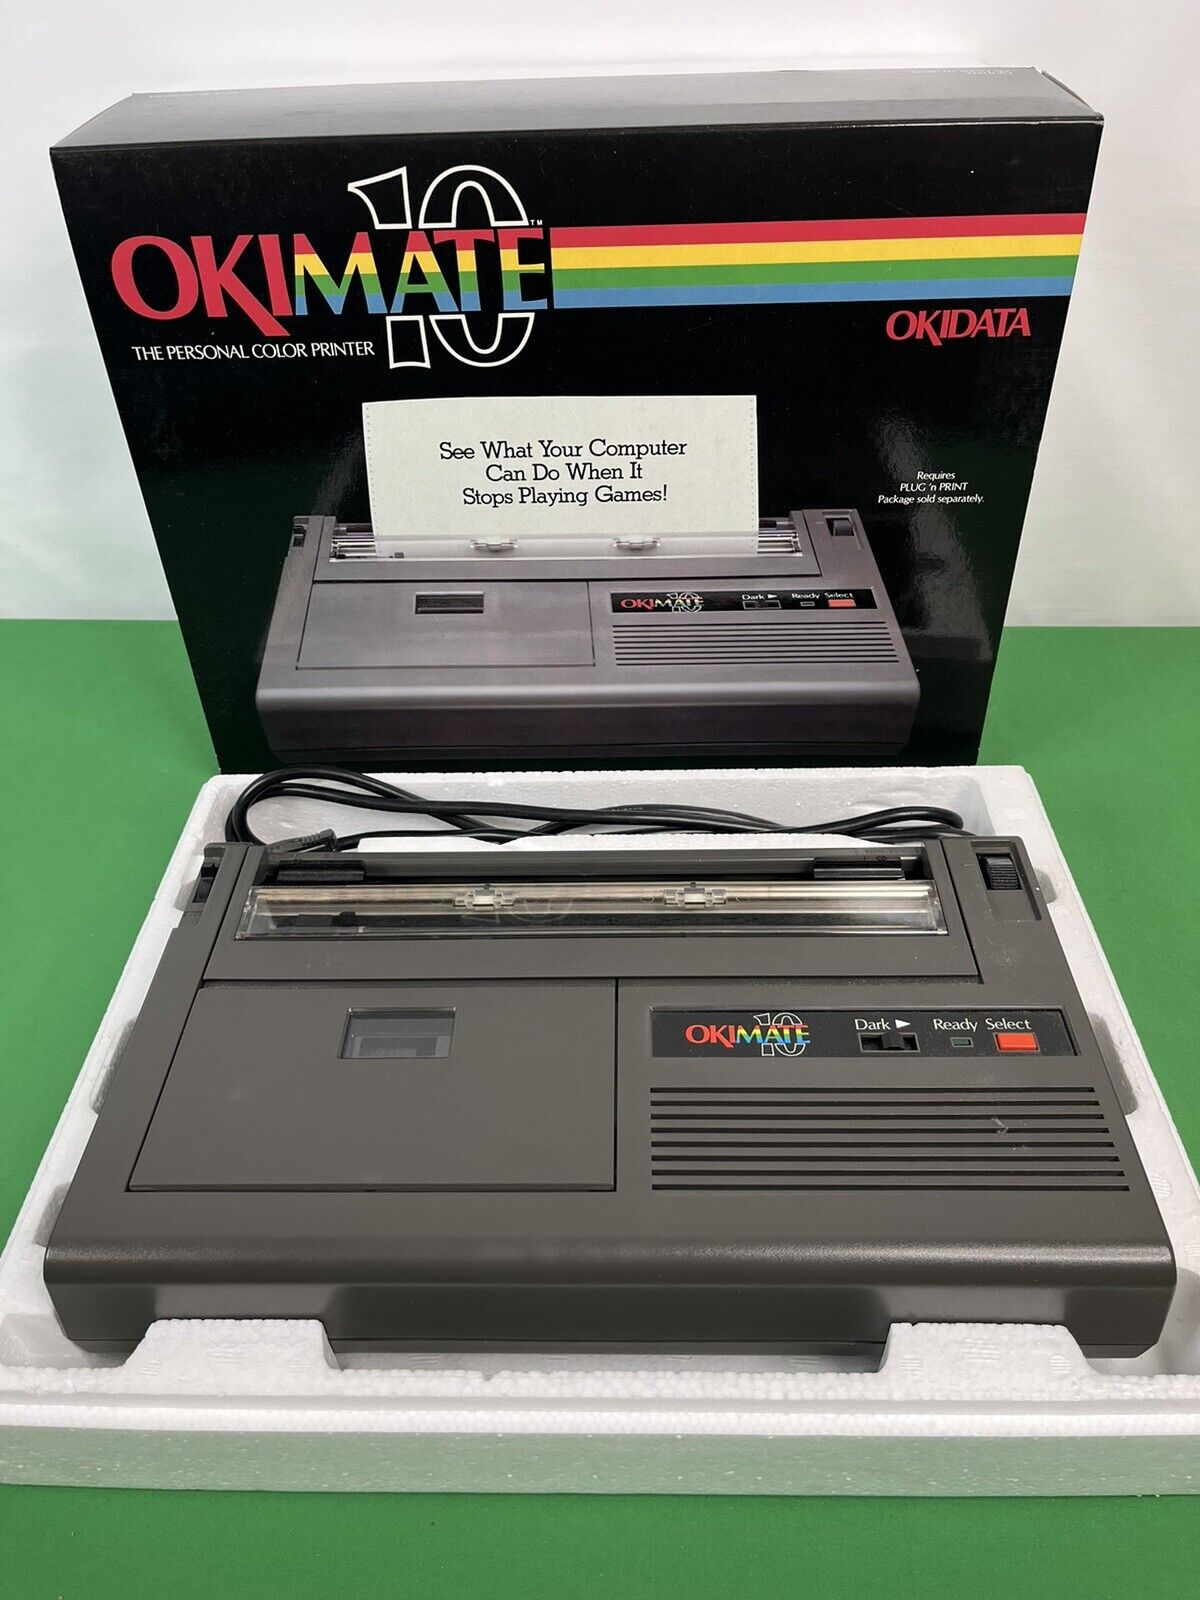 Okidata Okimate 10 Personal Printer Color Very Good Original Box and Manuals